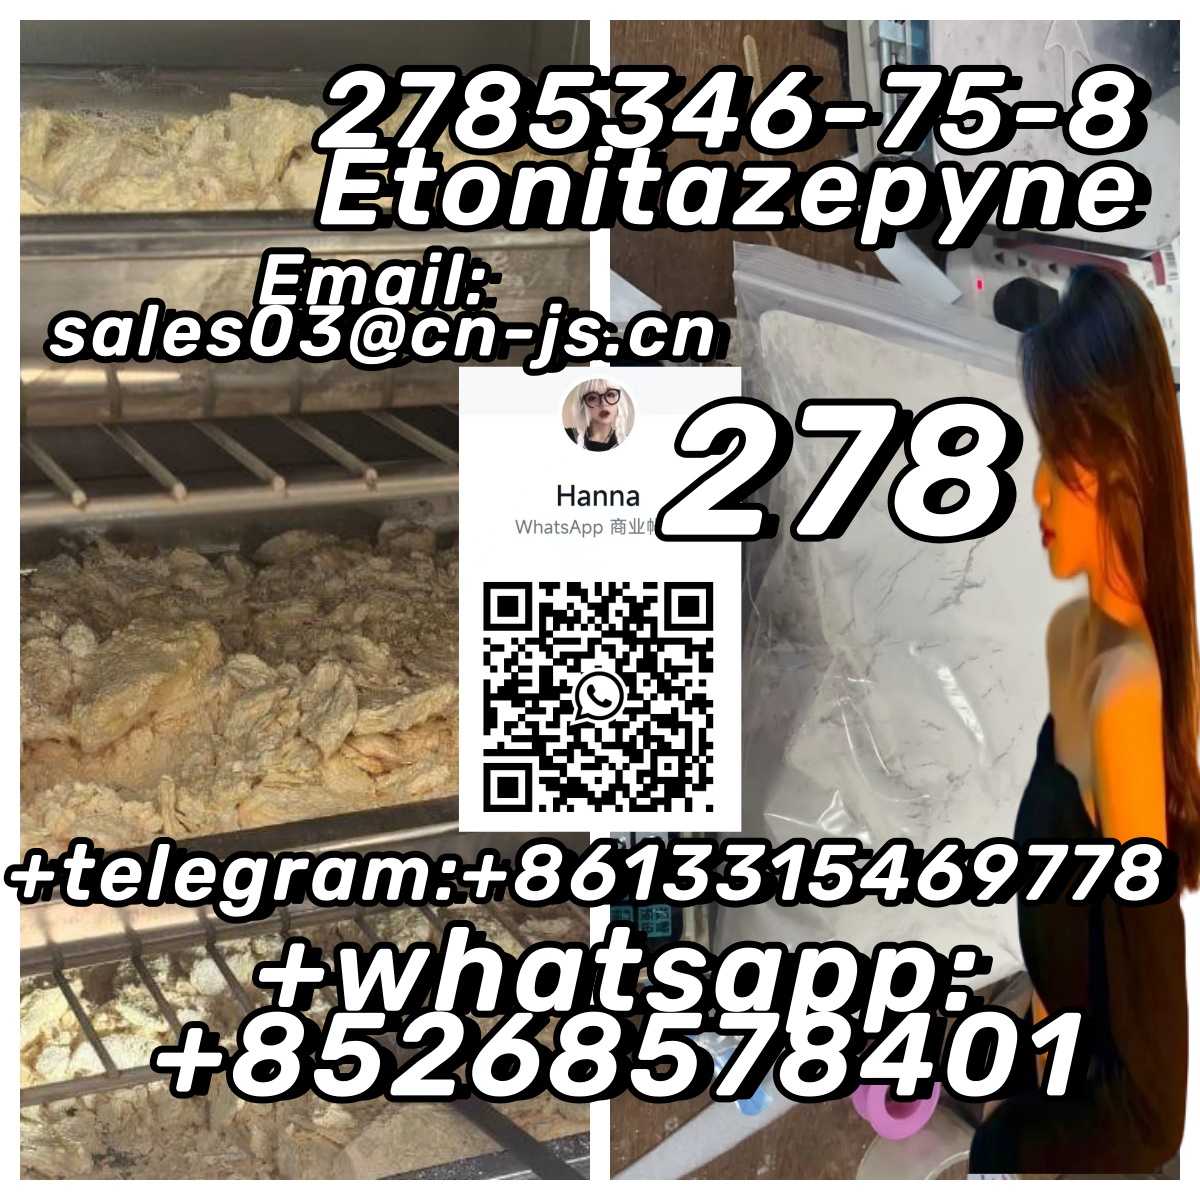 99%high purity 2785346-75-8 Etonitazepyne ,11111,Mobiles,Tablets